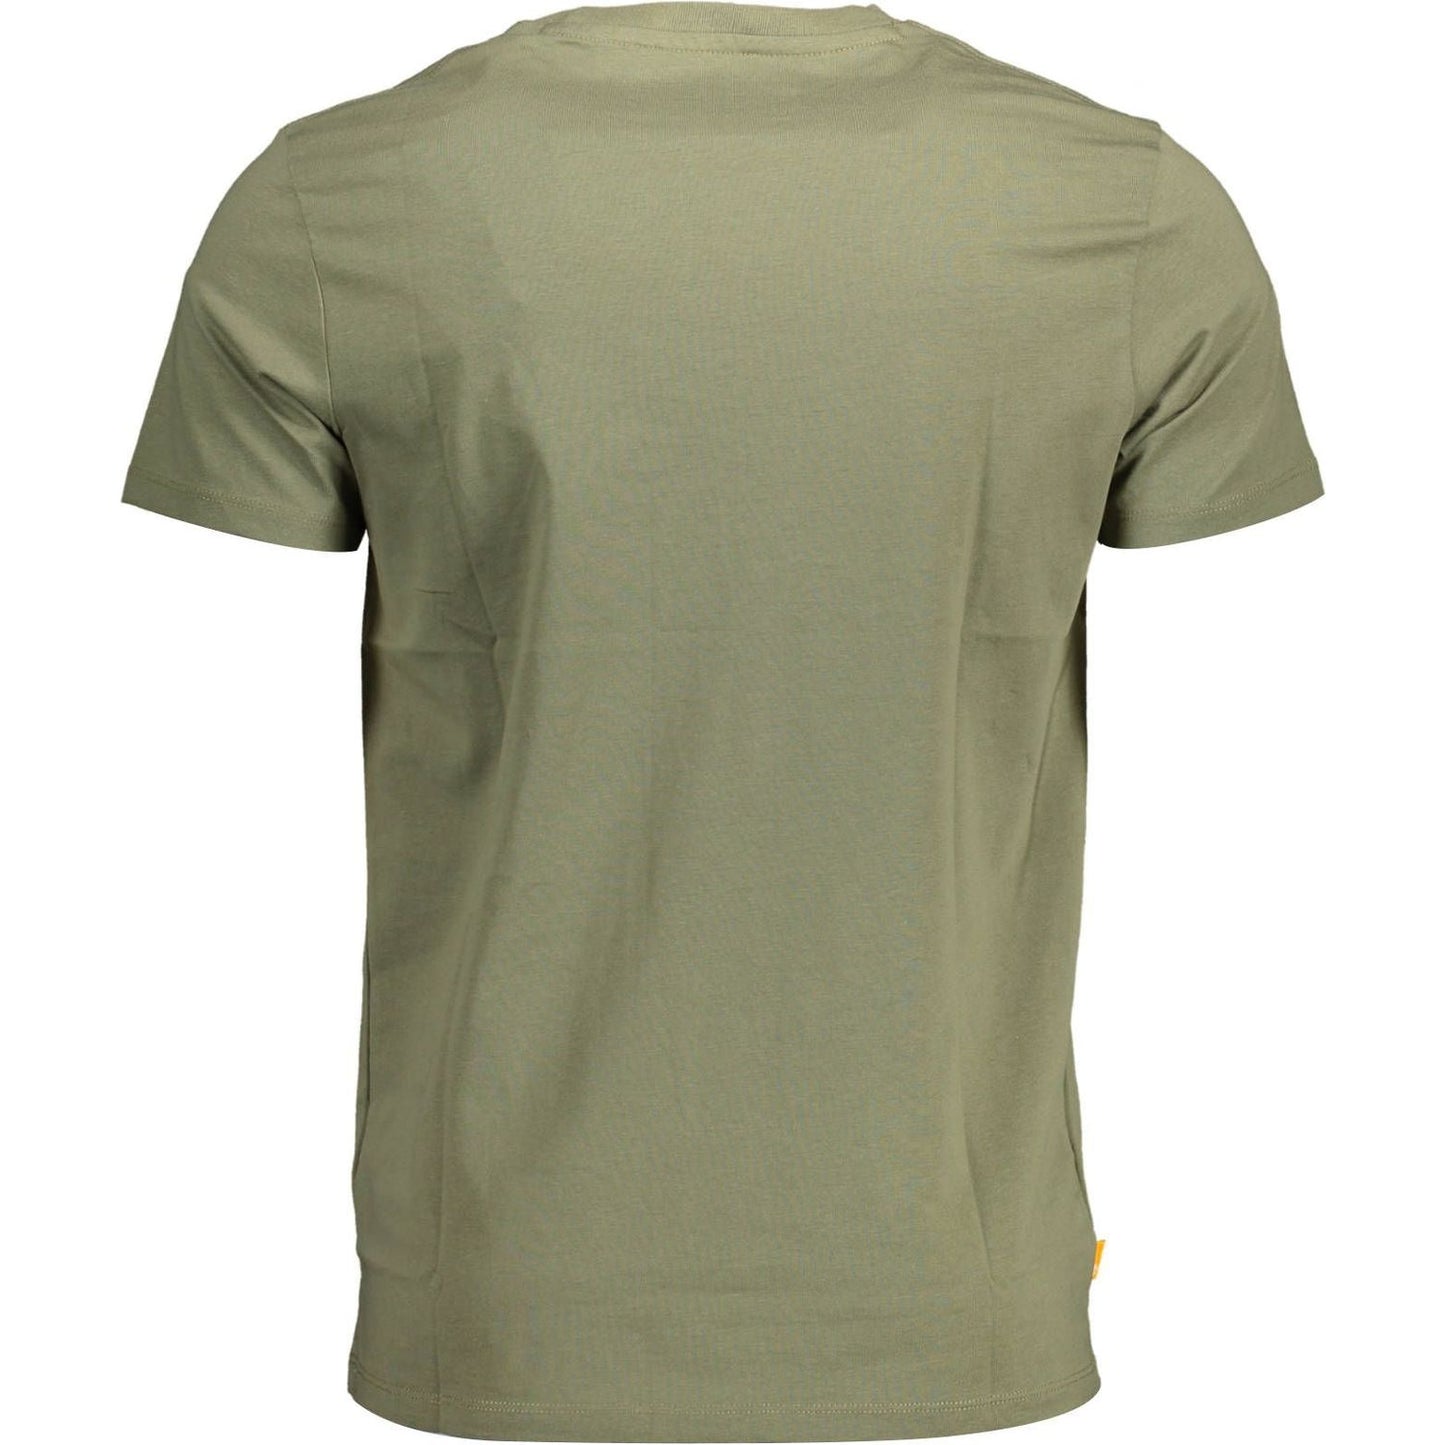 Timberland Classic Green Round Neck T-Shirt classic-green-round-neck-t-shirt